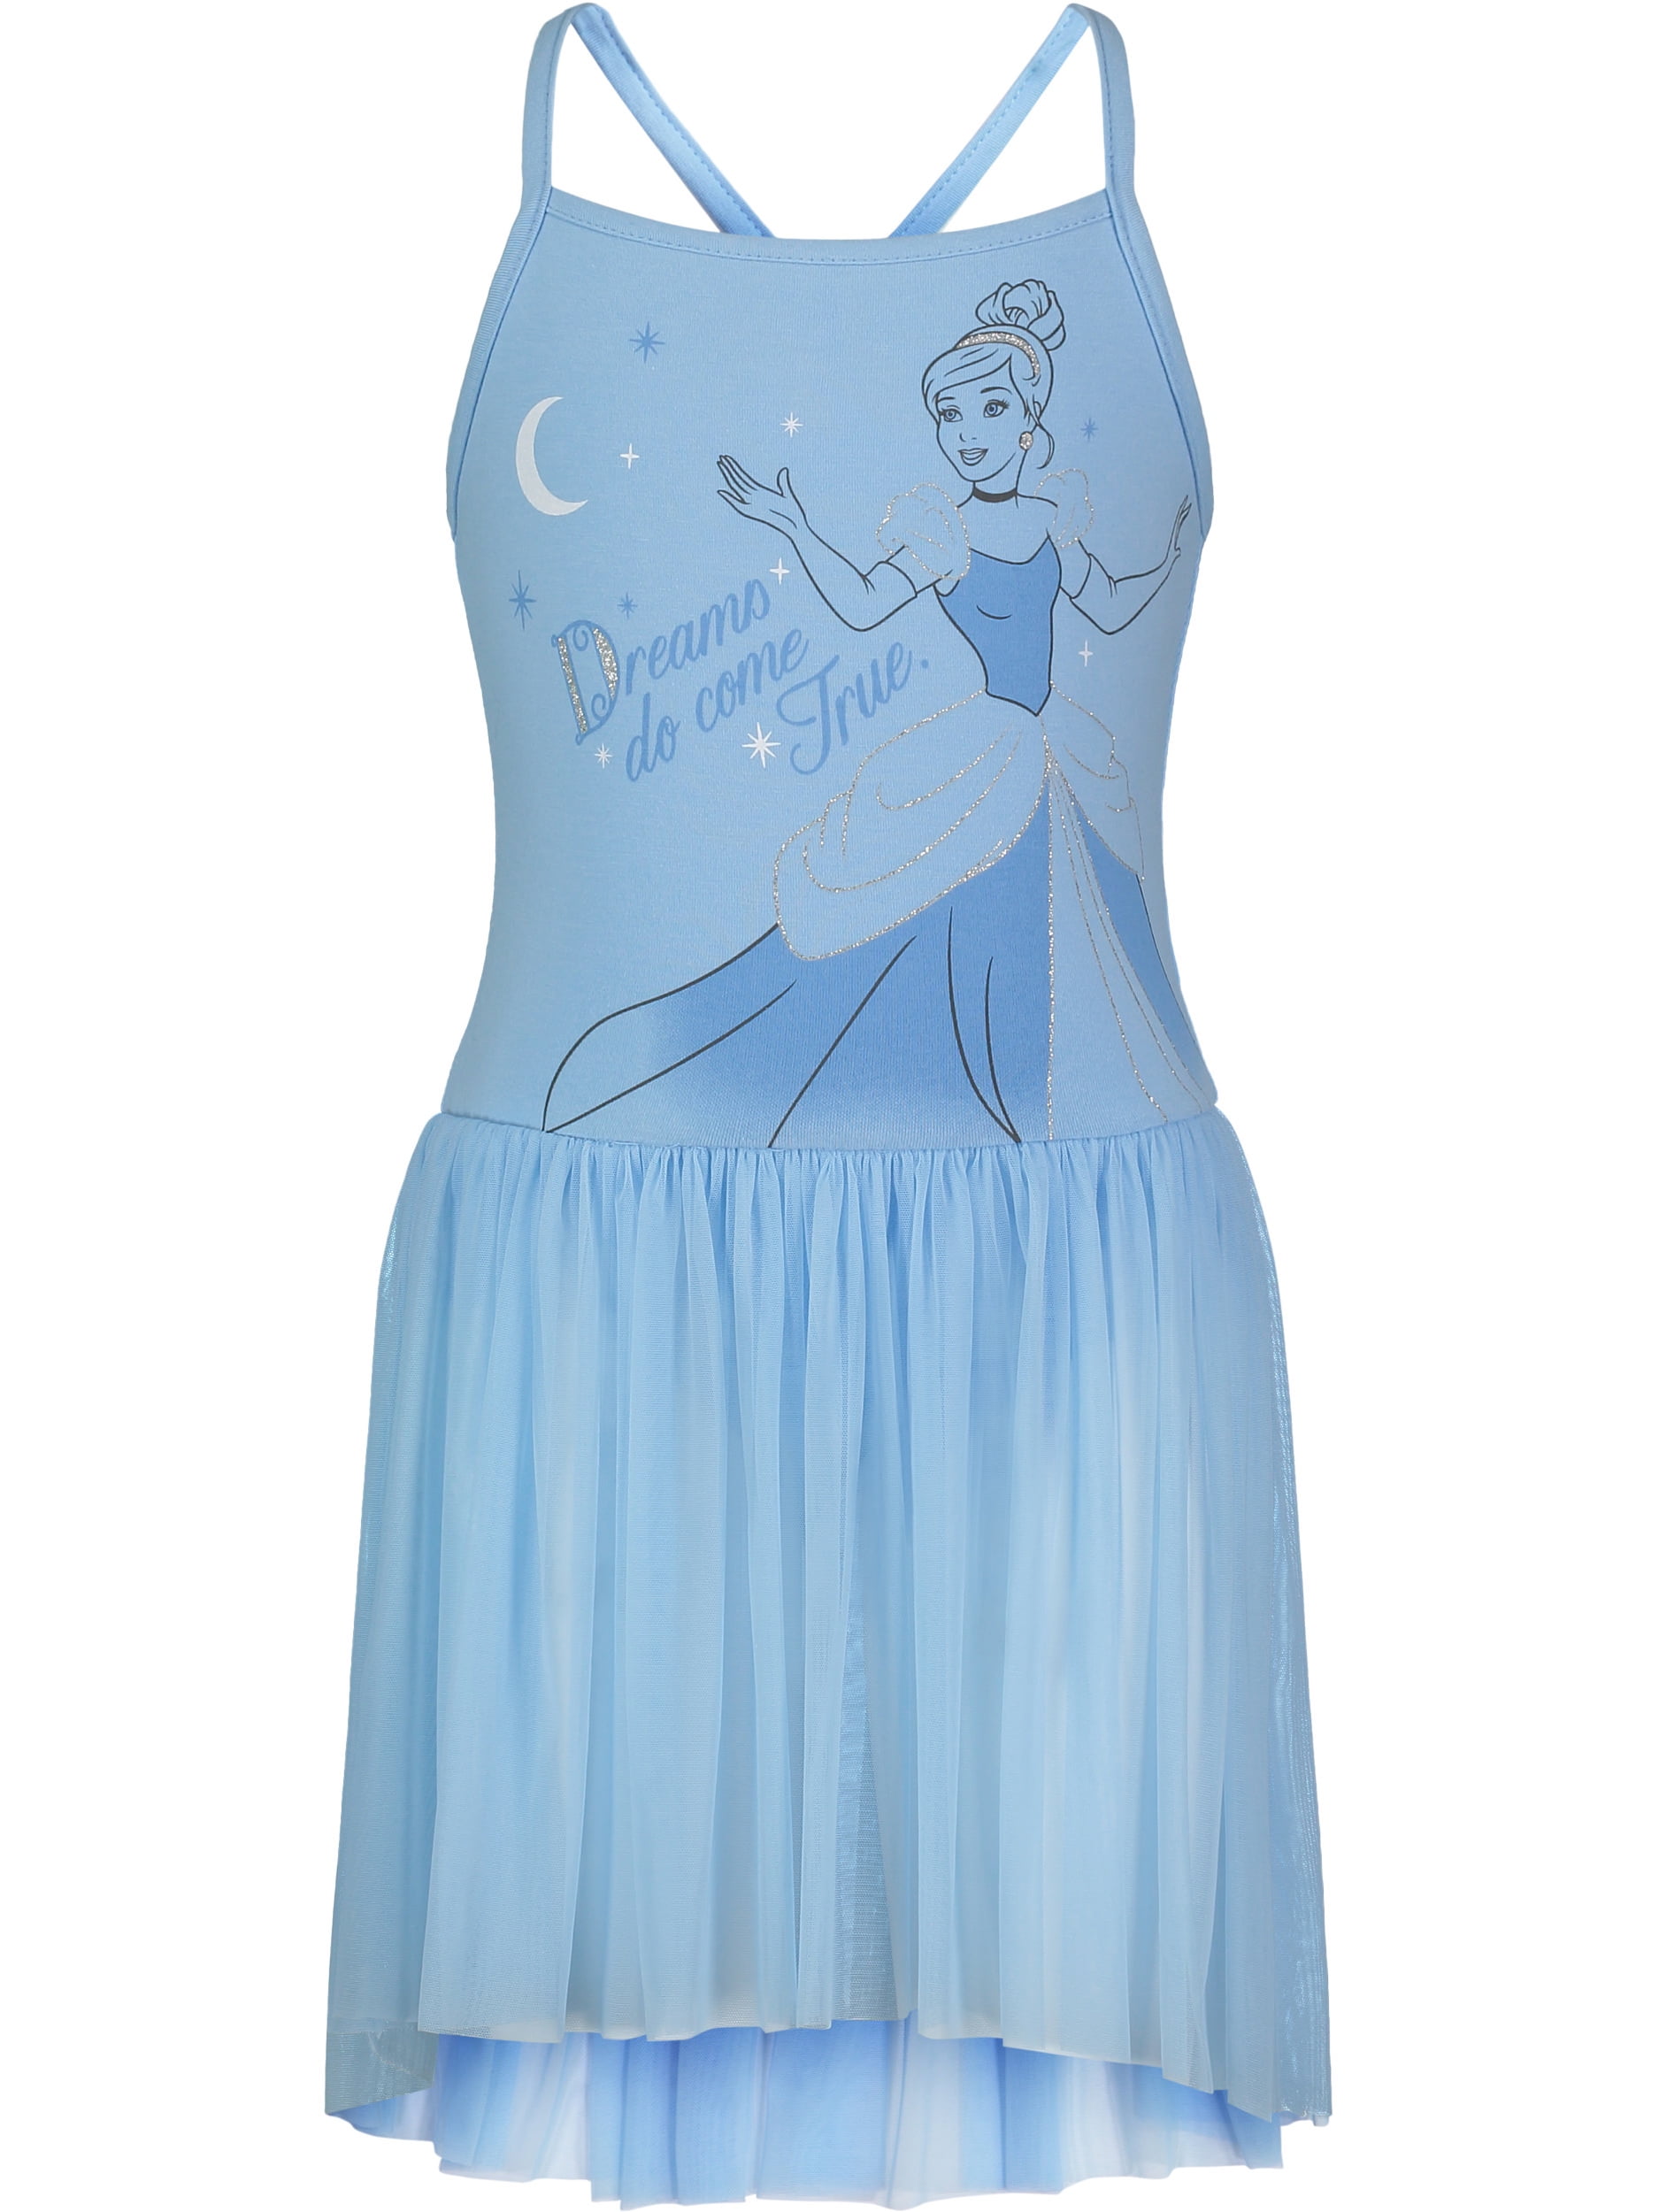 3t disney princess dress